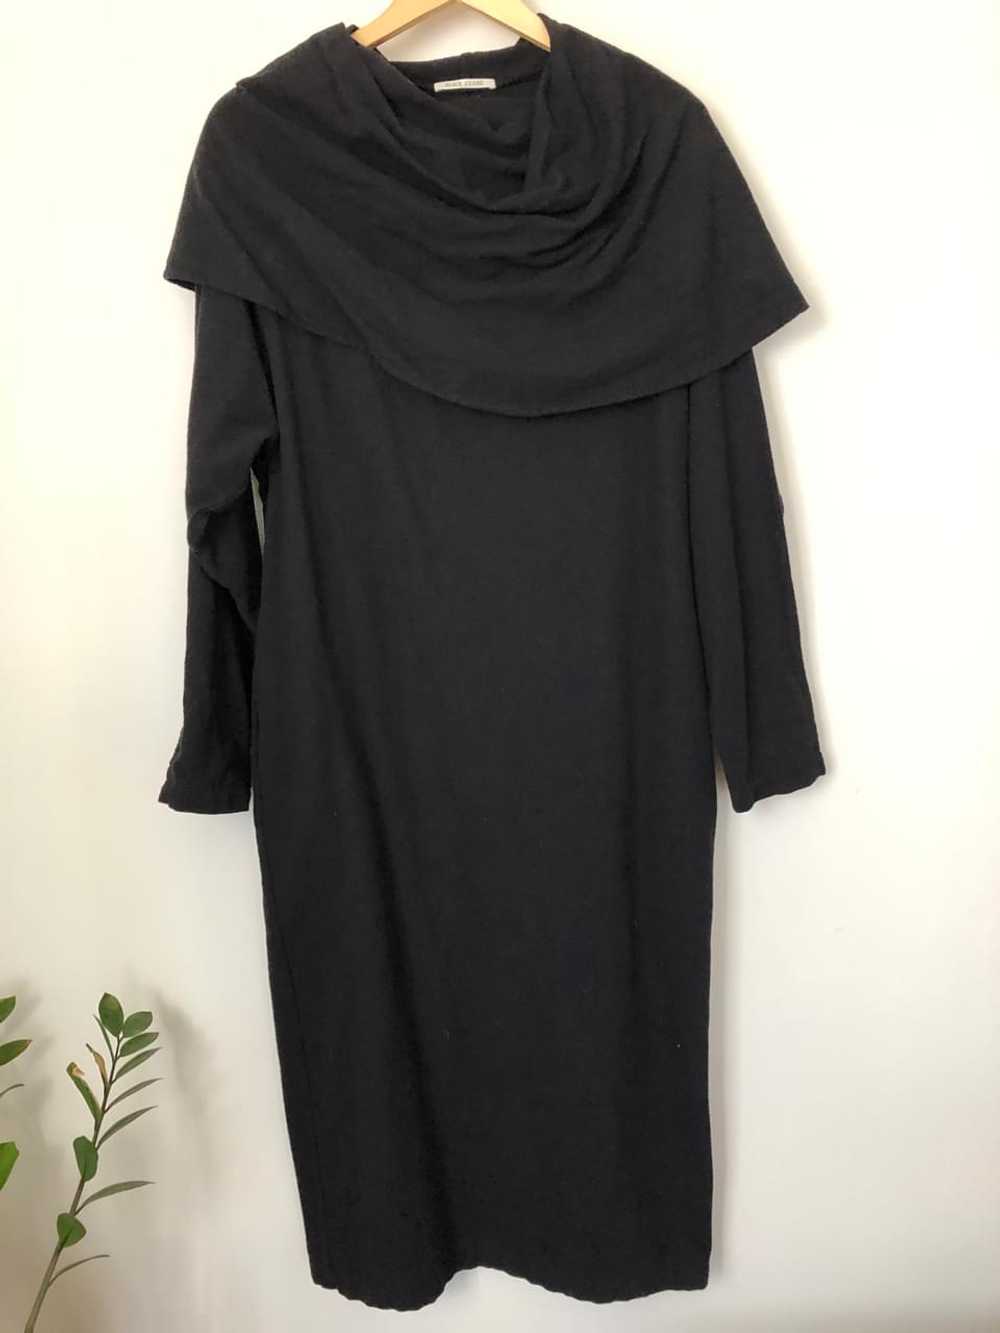 Black Crane Shell Dress (XS) - image 1